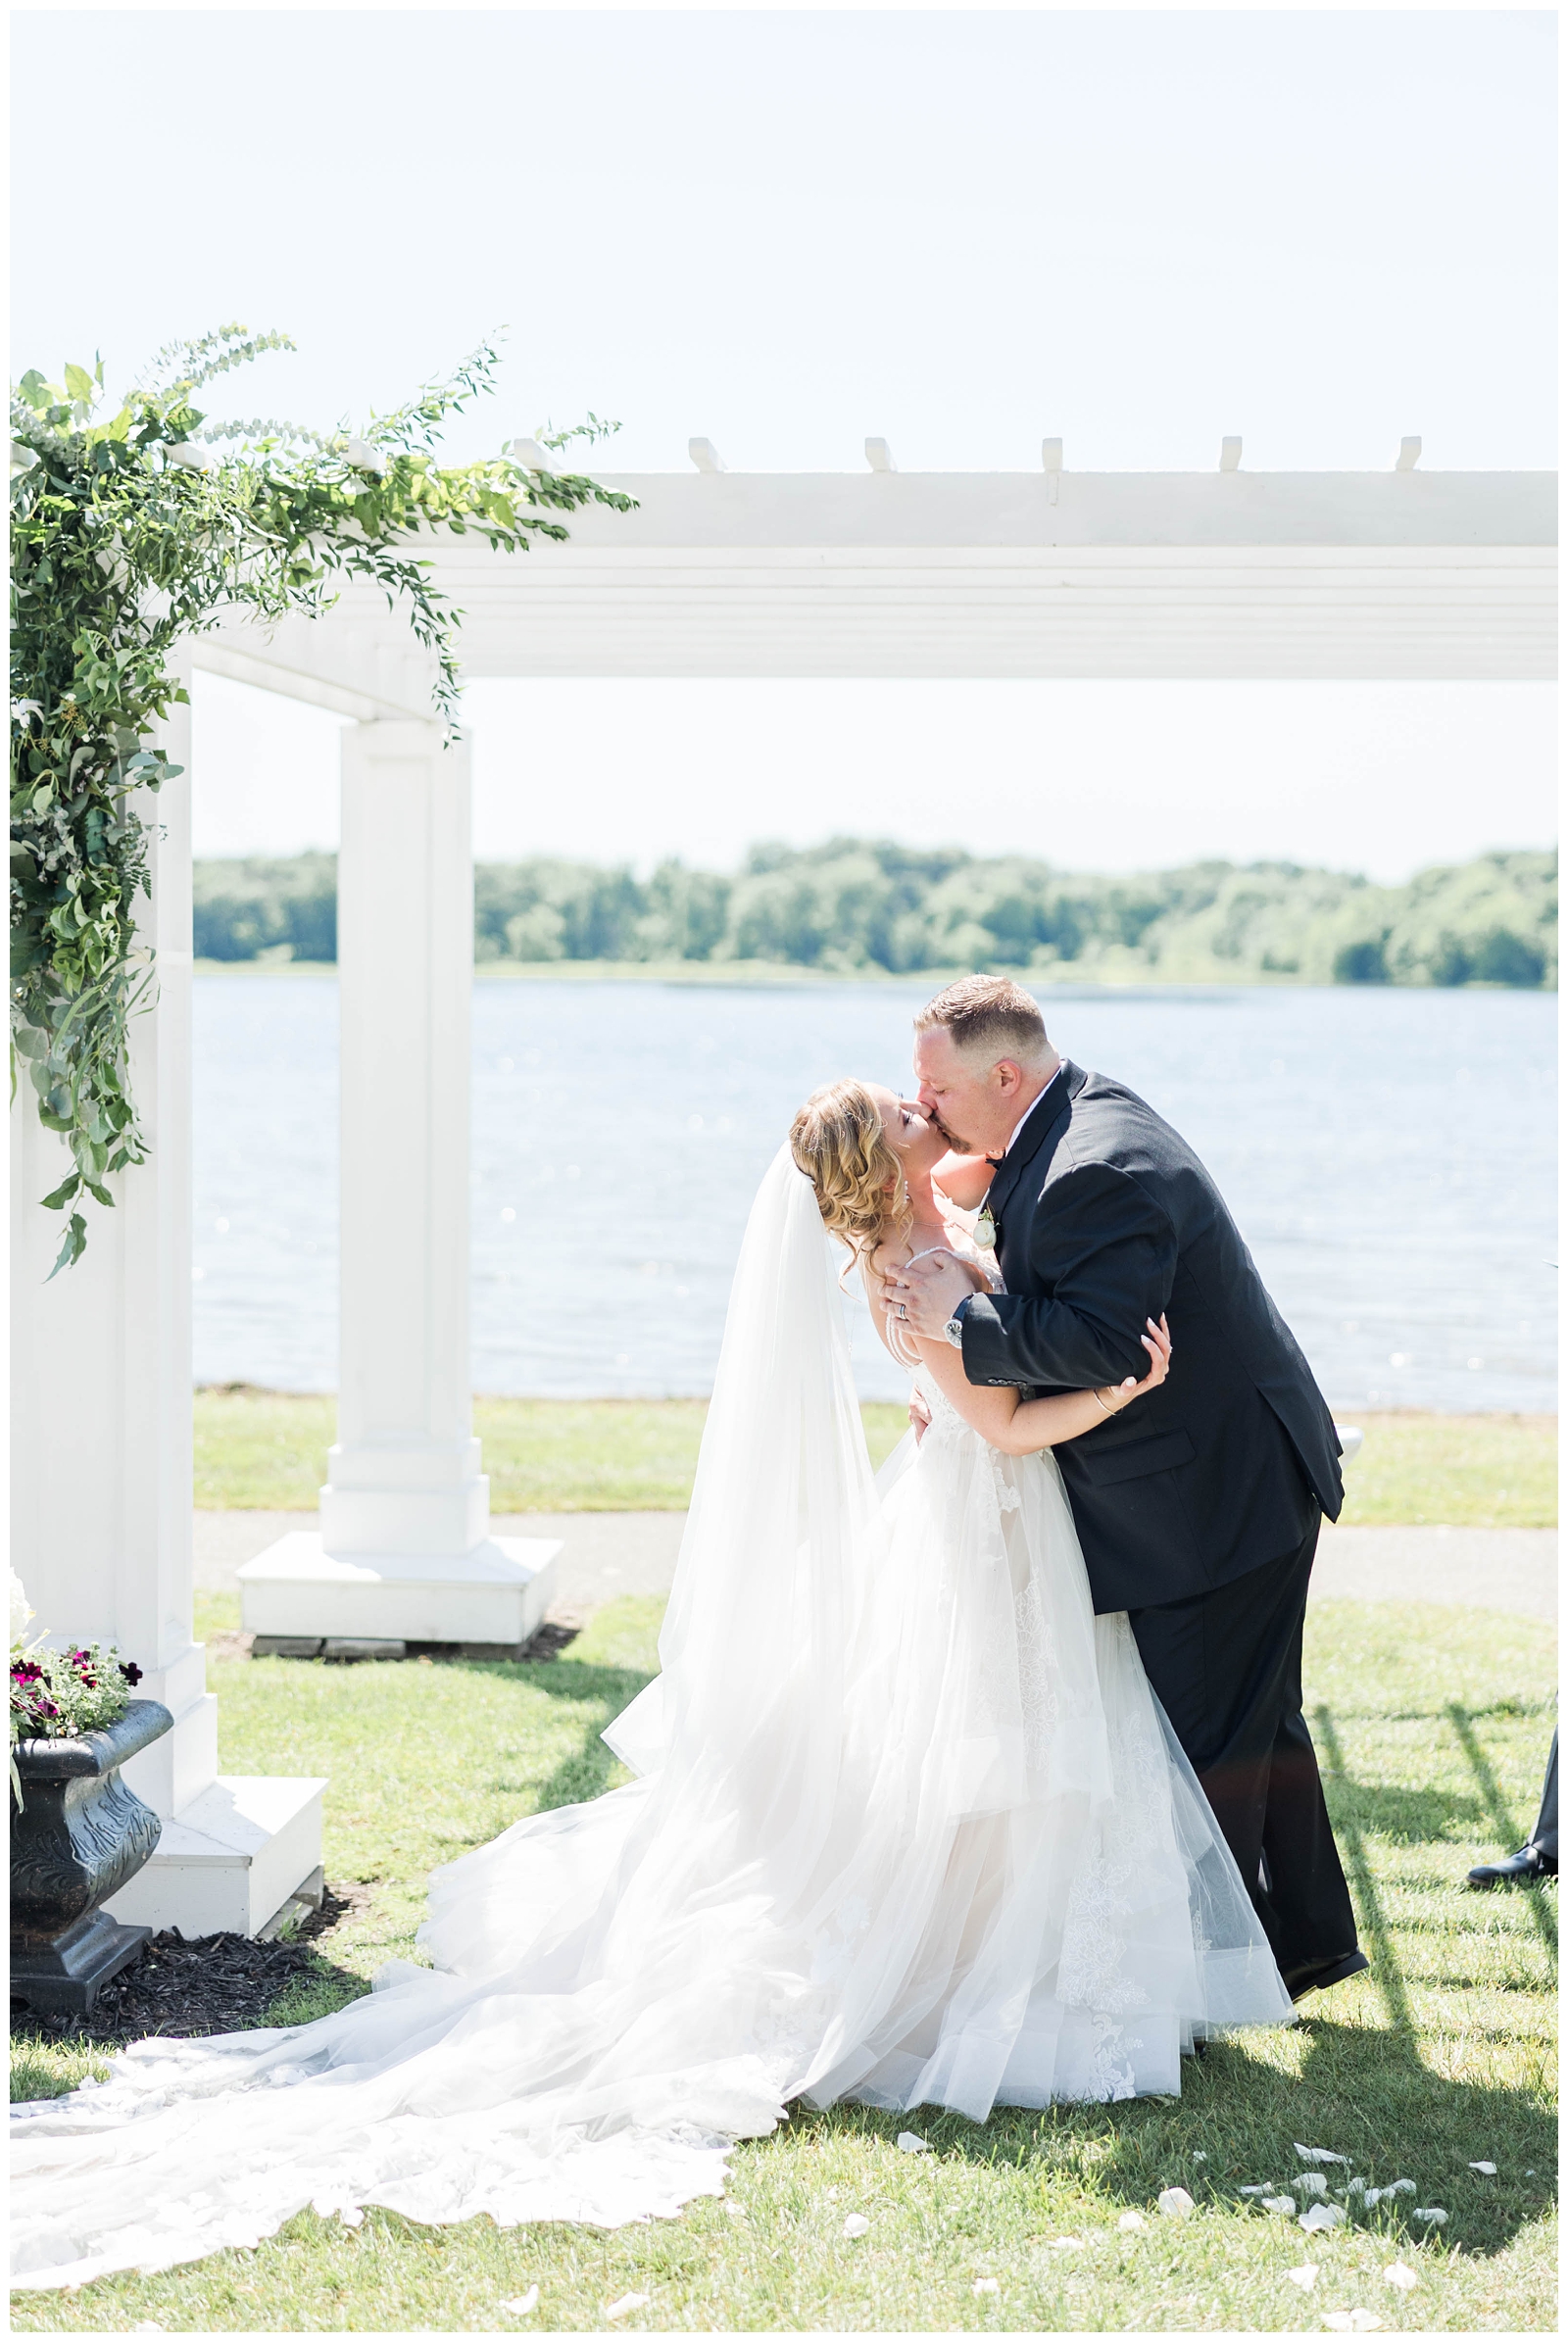 Outdoor lakeside wedding ceremony in Michigan